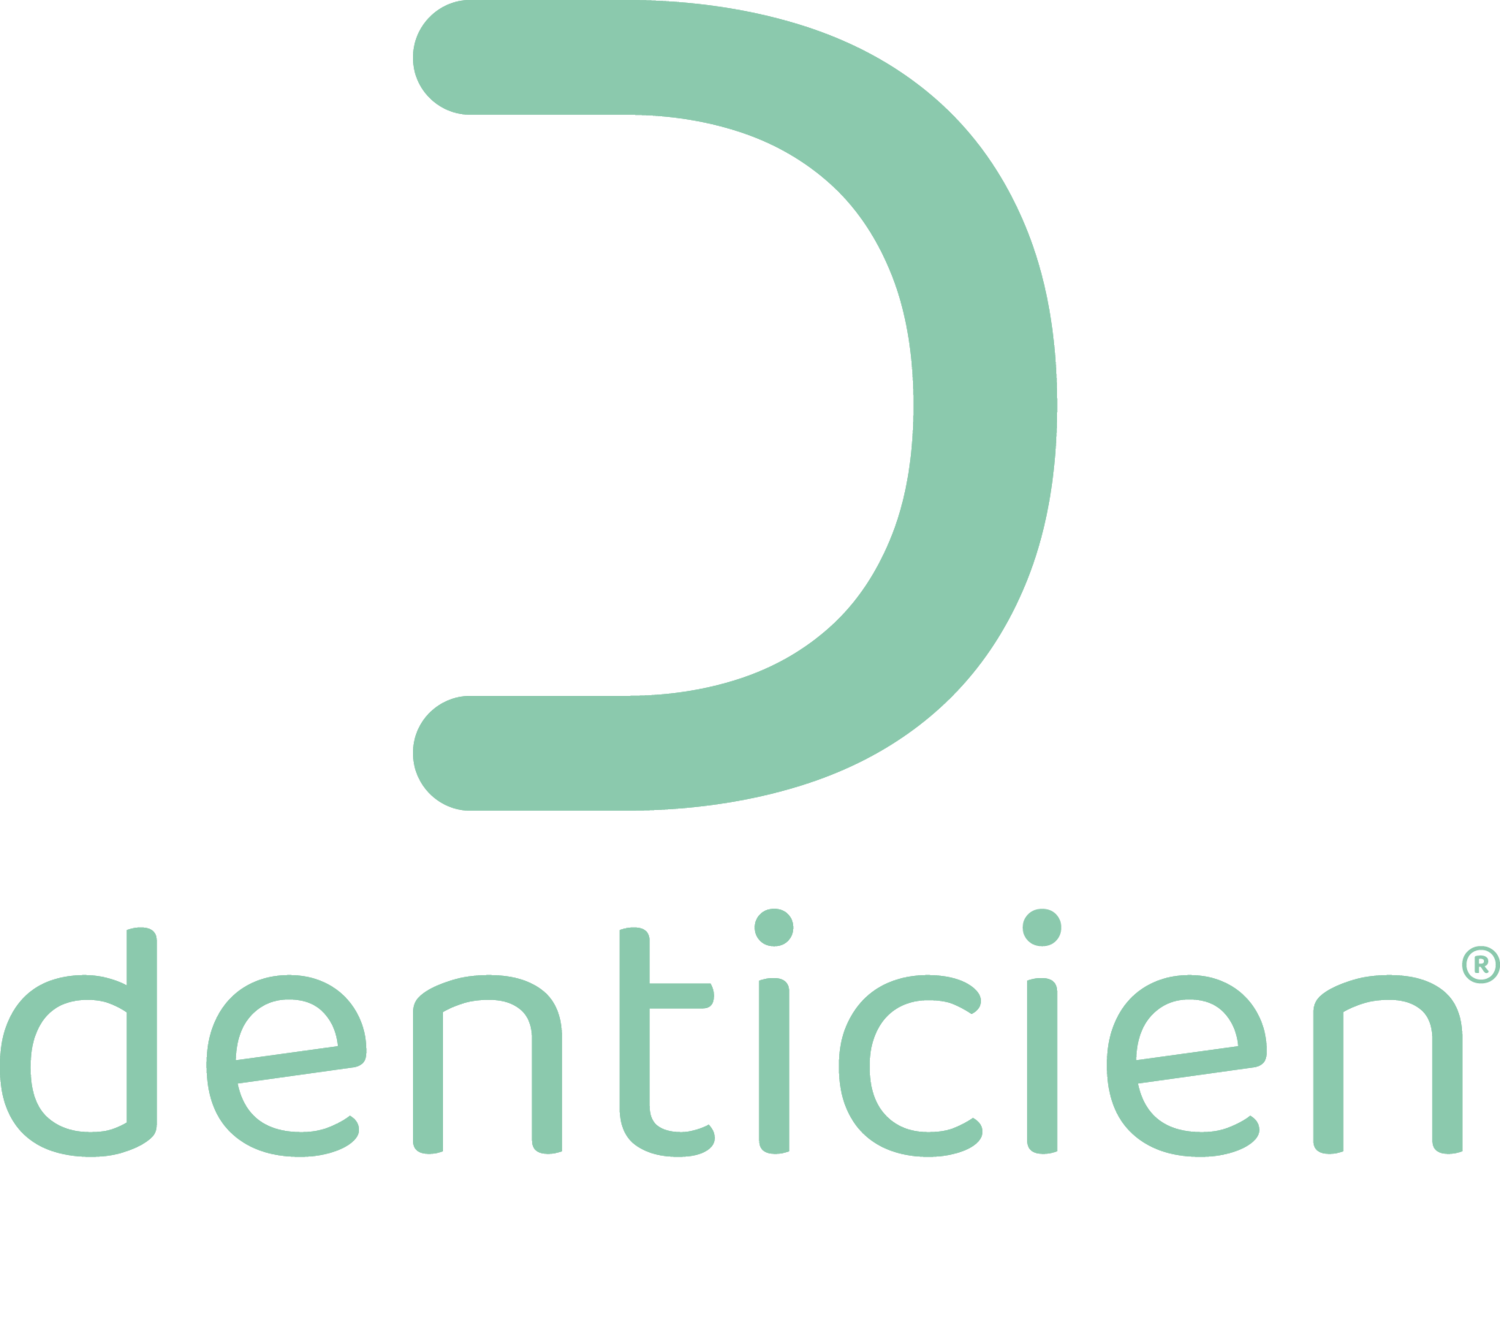 Denticien_logo.png